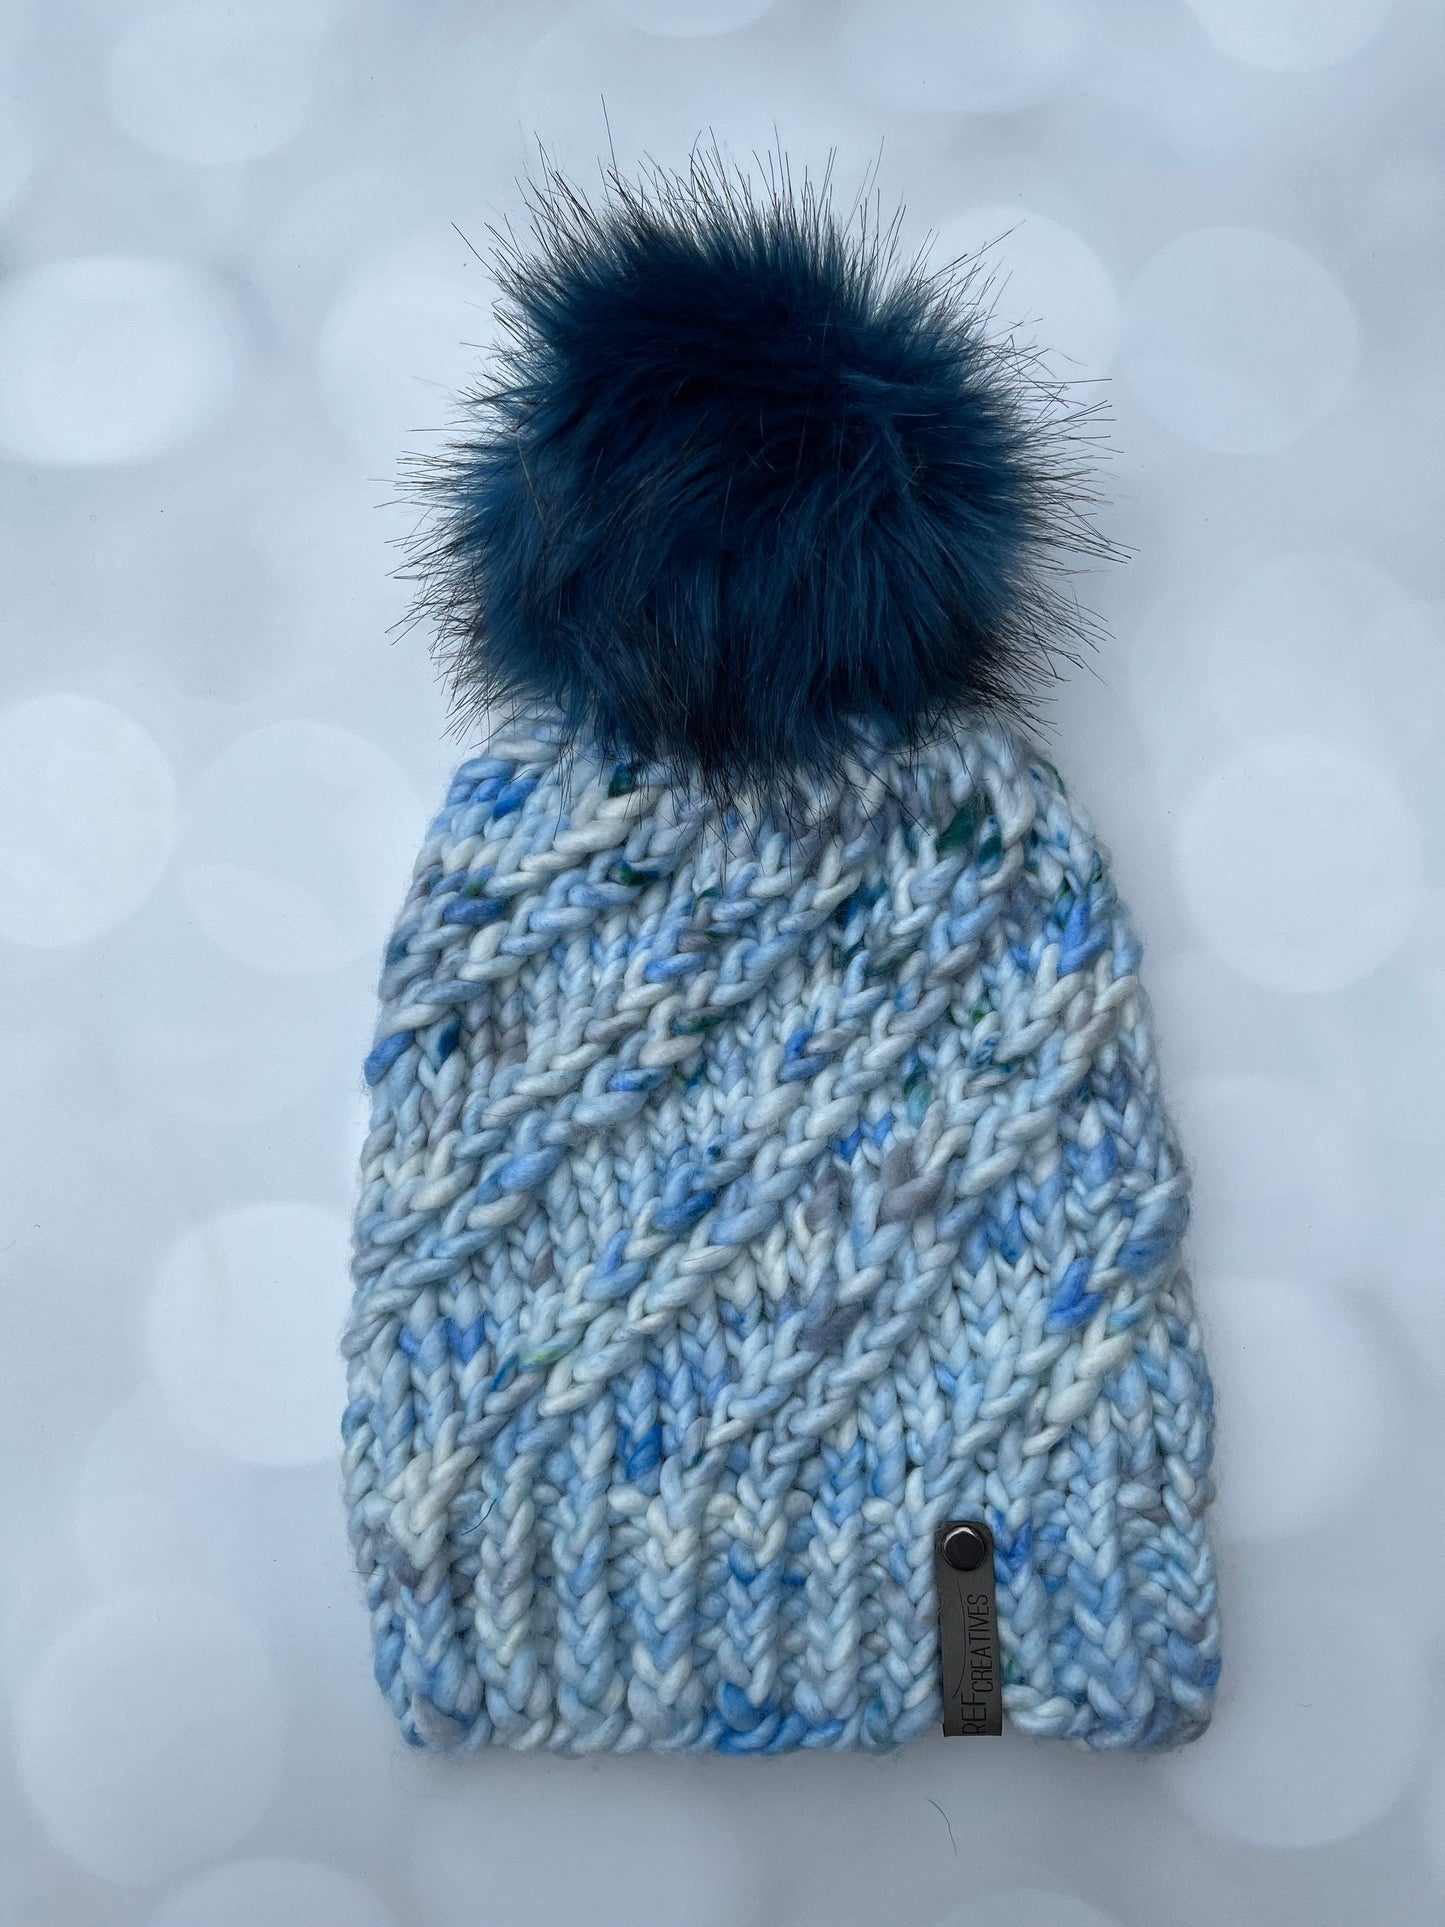 Luxury Blue Merino Wool Knit Hat - Snow Drifts Swirls Hand Knit Hat with Hand Dyed Yarn